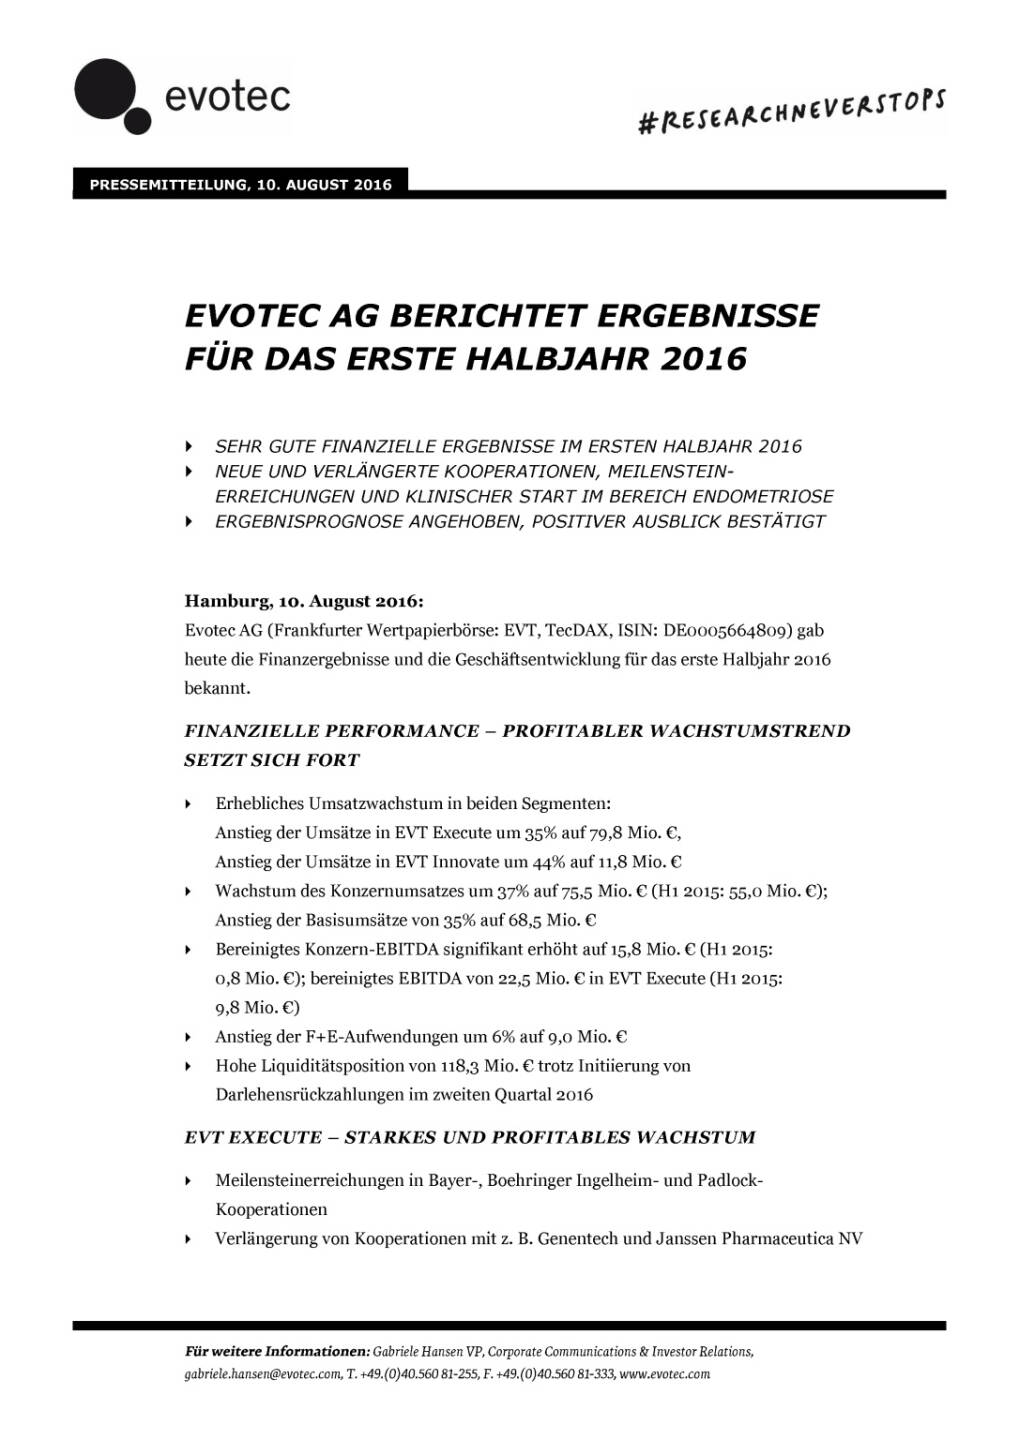 Evotec: 1 Halbjahr 2016, Seite 1/7, komplettes Dokument unter http://boerse-social.com/static/uploads/file_1593_evotec_1_halbjahr_2016.pdf